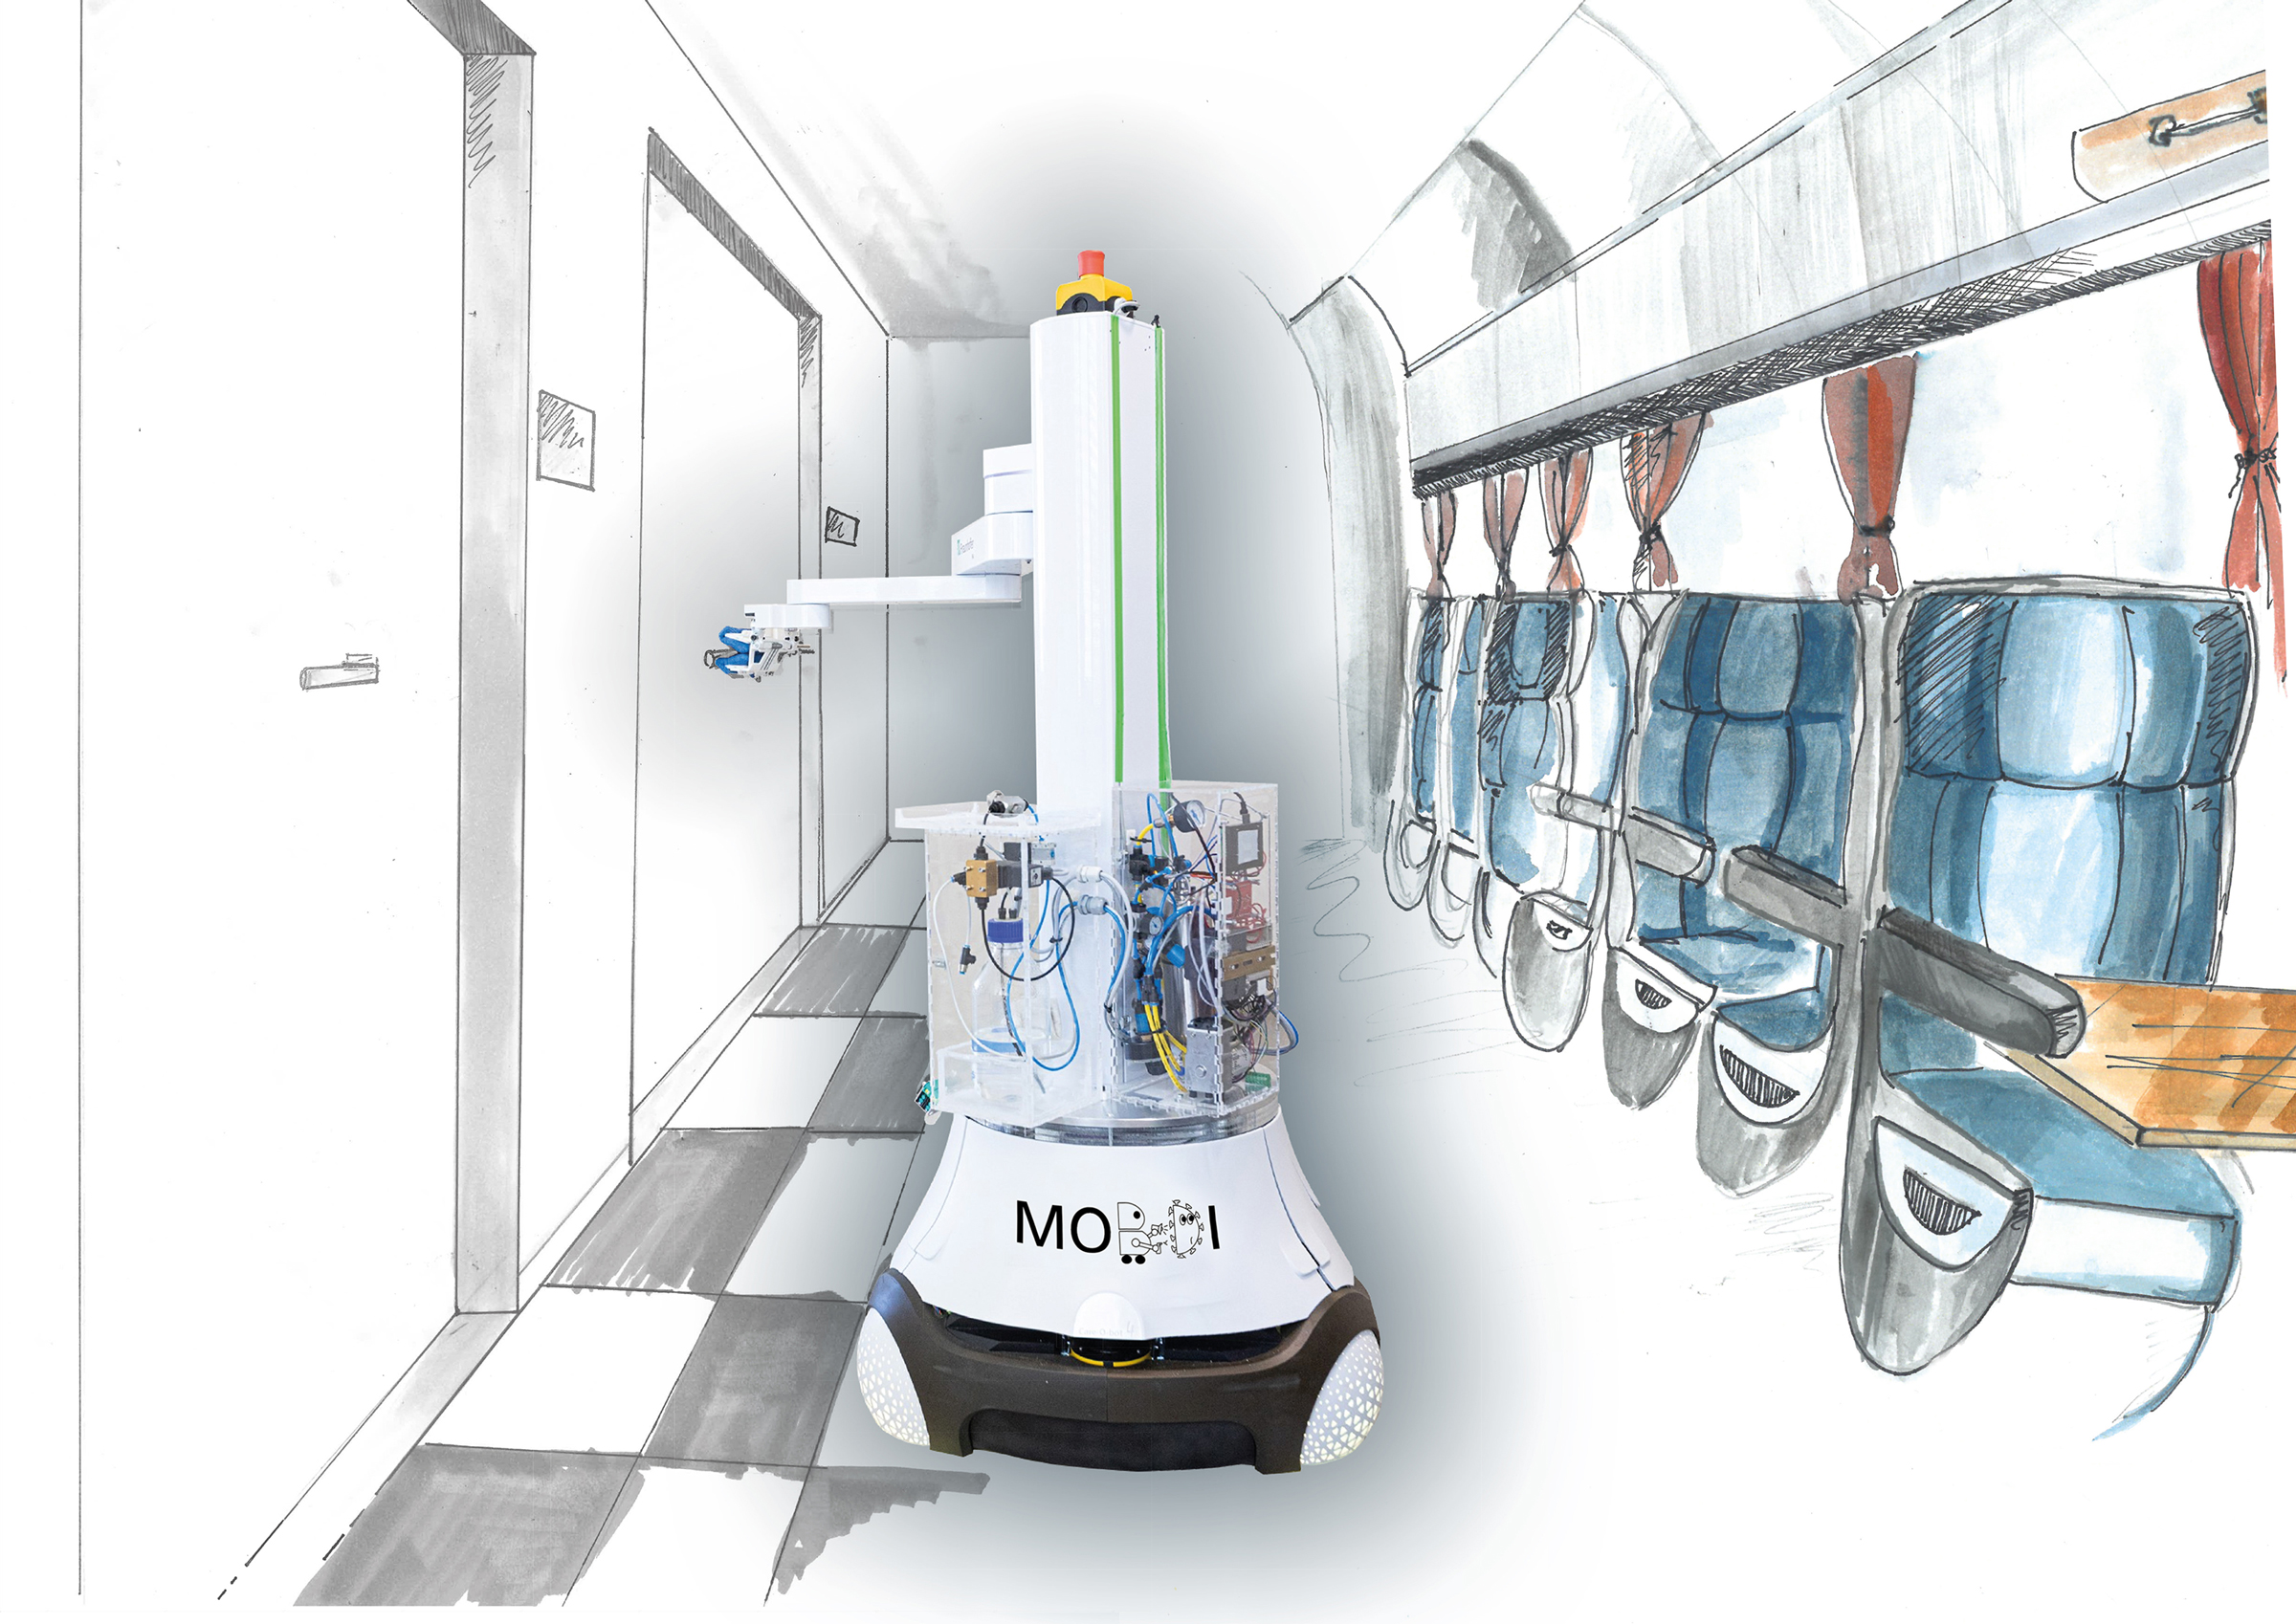 Illustration Service robot DekonBot during mobile disinfection (MobDi) of a public transport system.